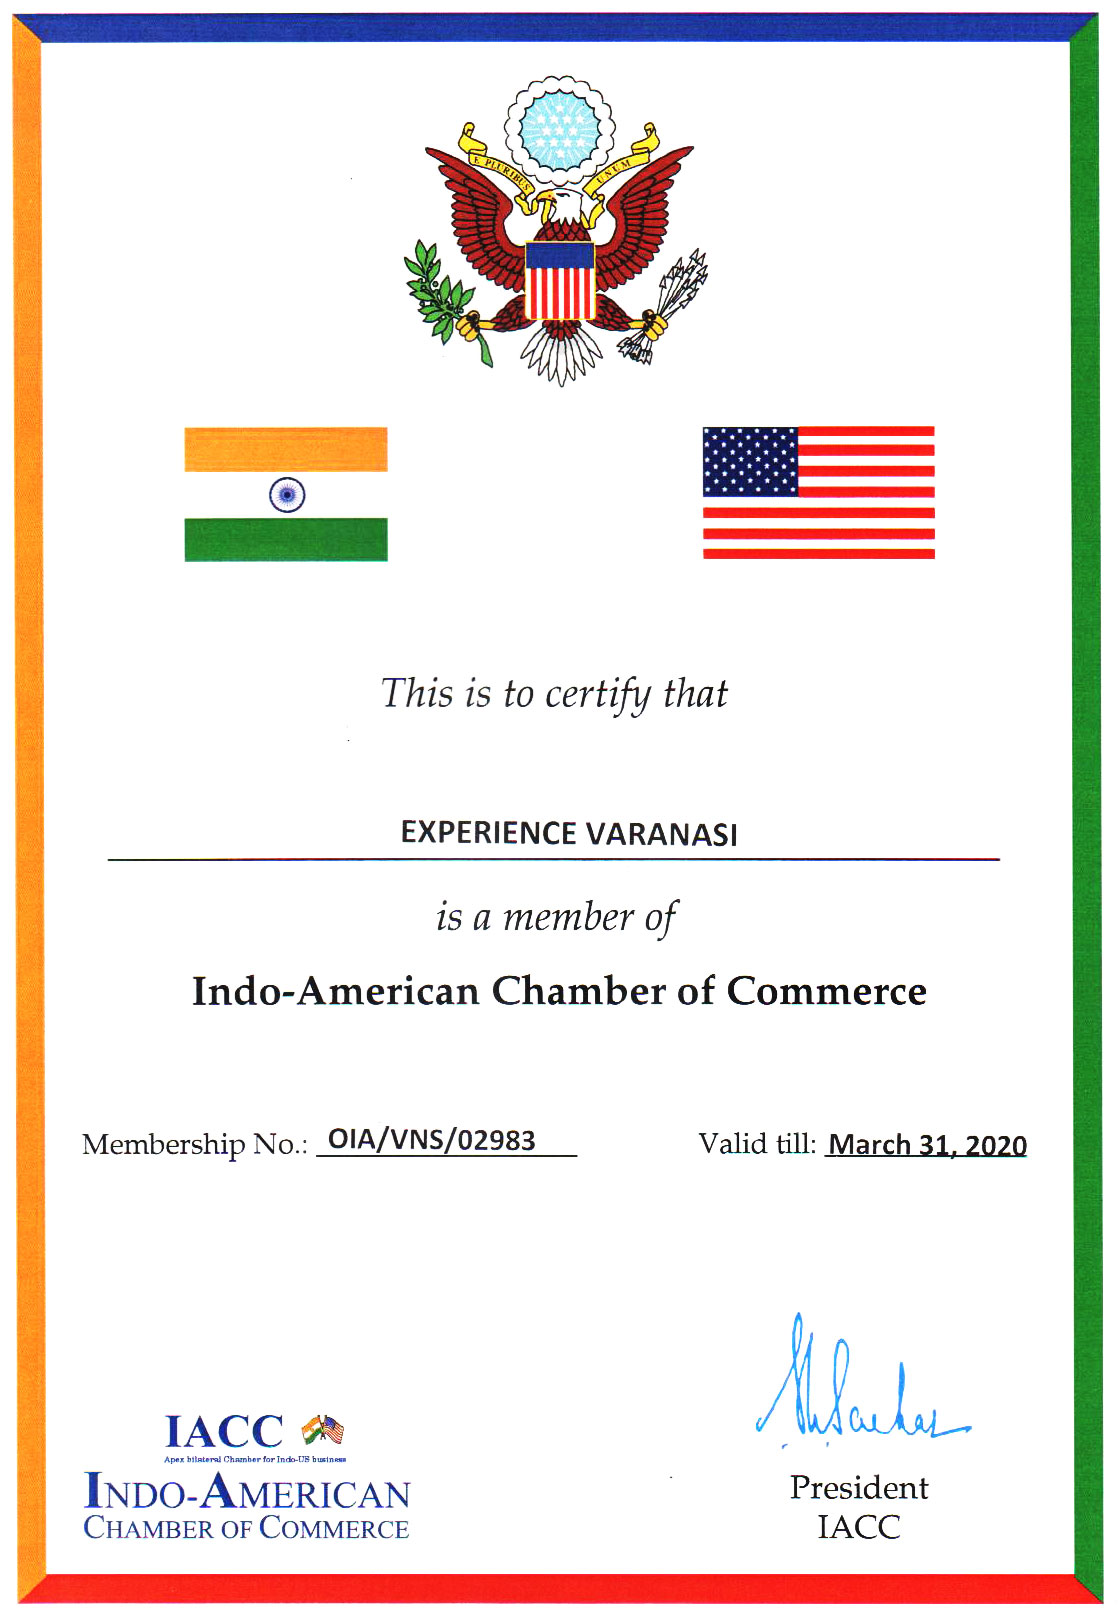 Indo-American Chamber of Commerce Membership